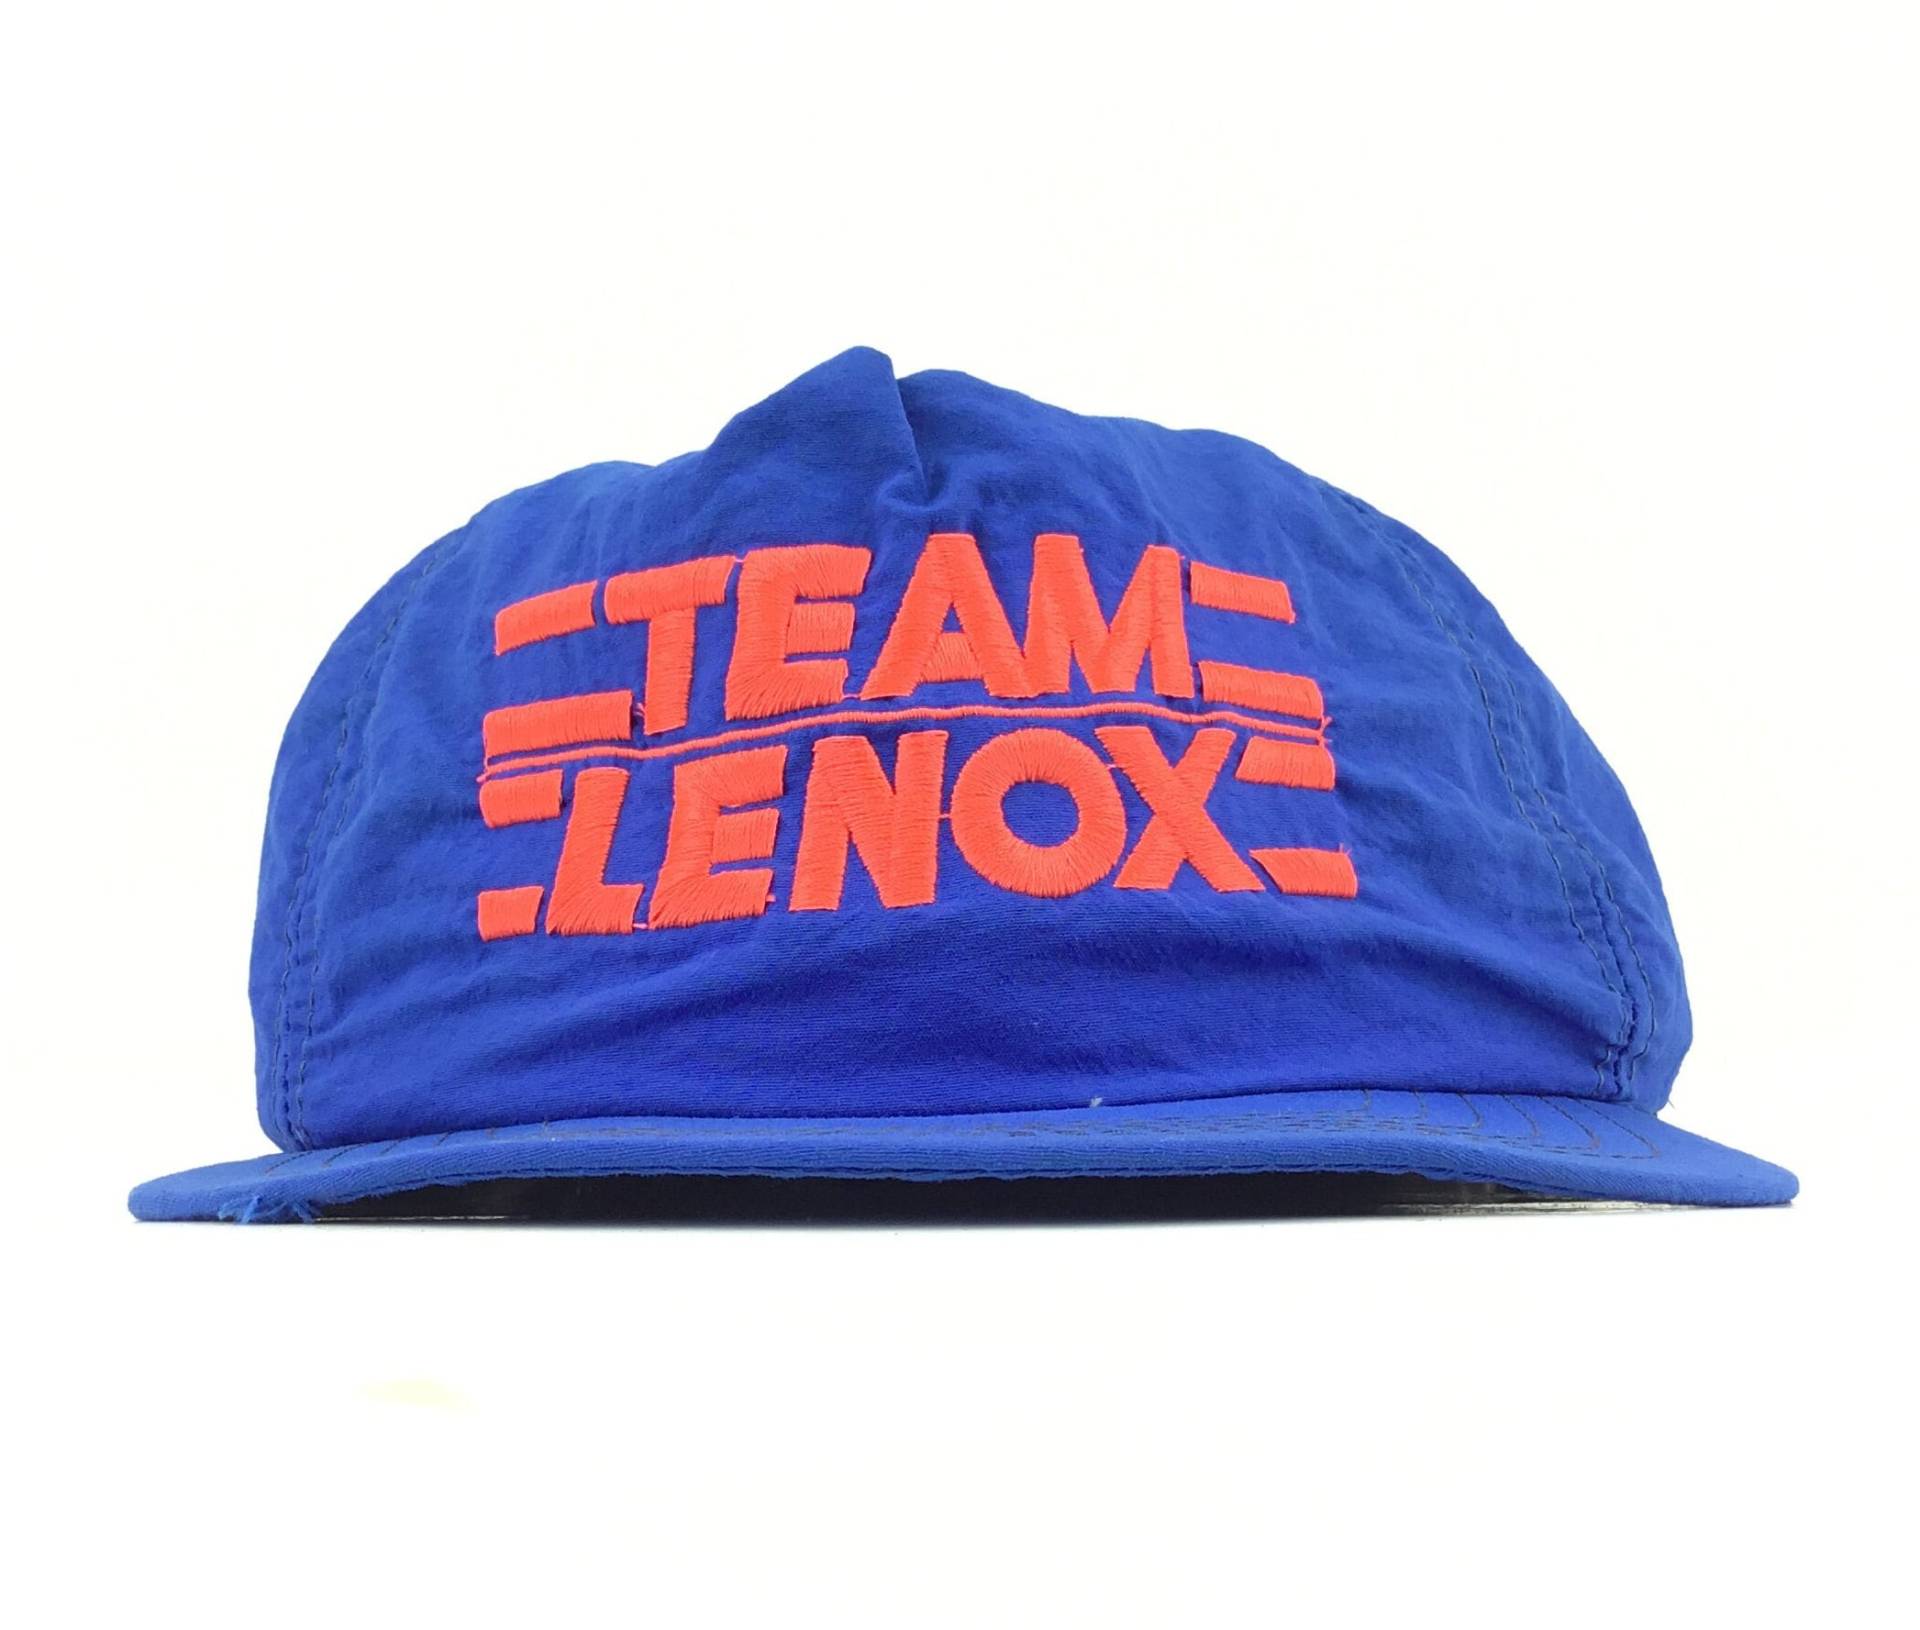 Vintage 1990Er Team Lenox Baseball Cap Hat Snapback Mens Size Made in Usa - As Is | Wie Fotogalerie Zu Sehen von arm90210